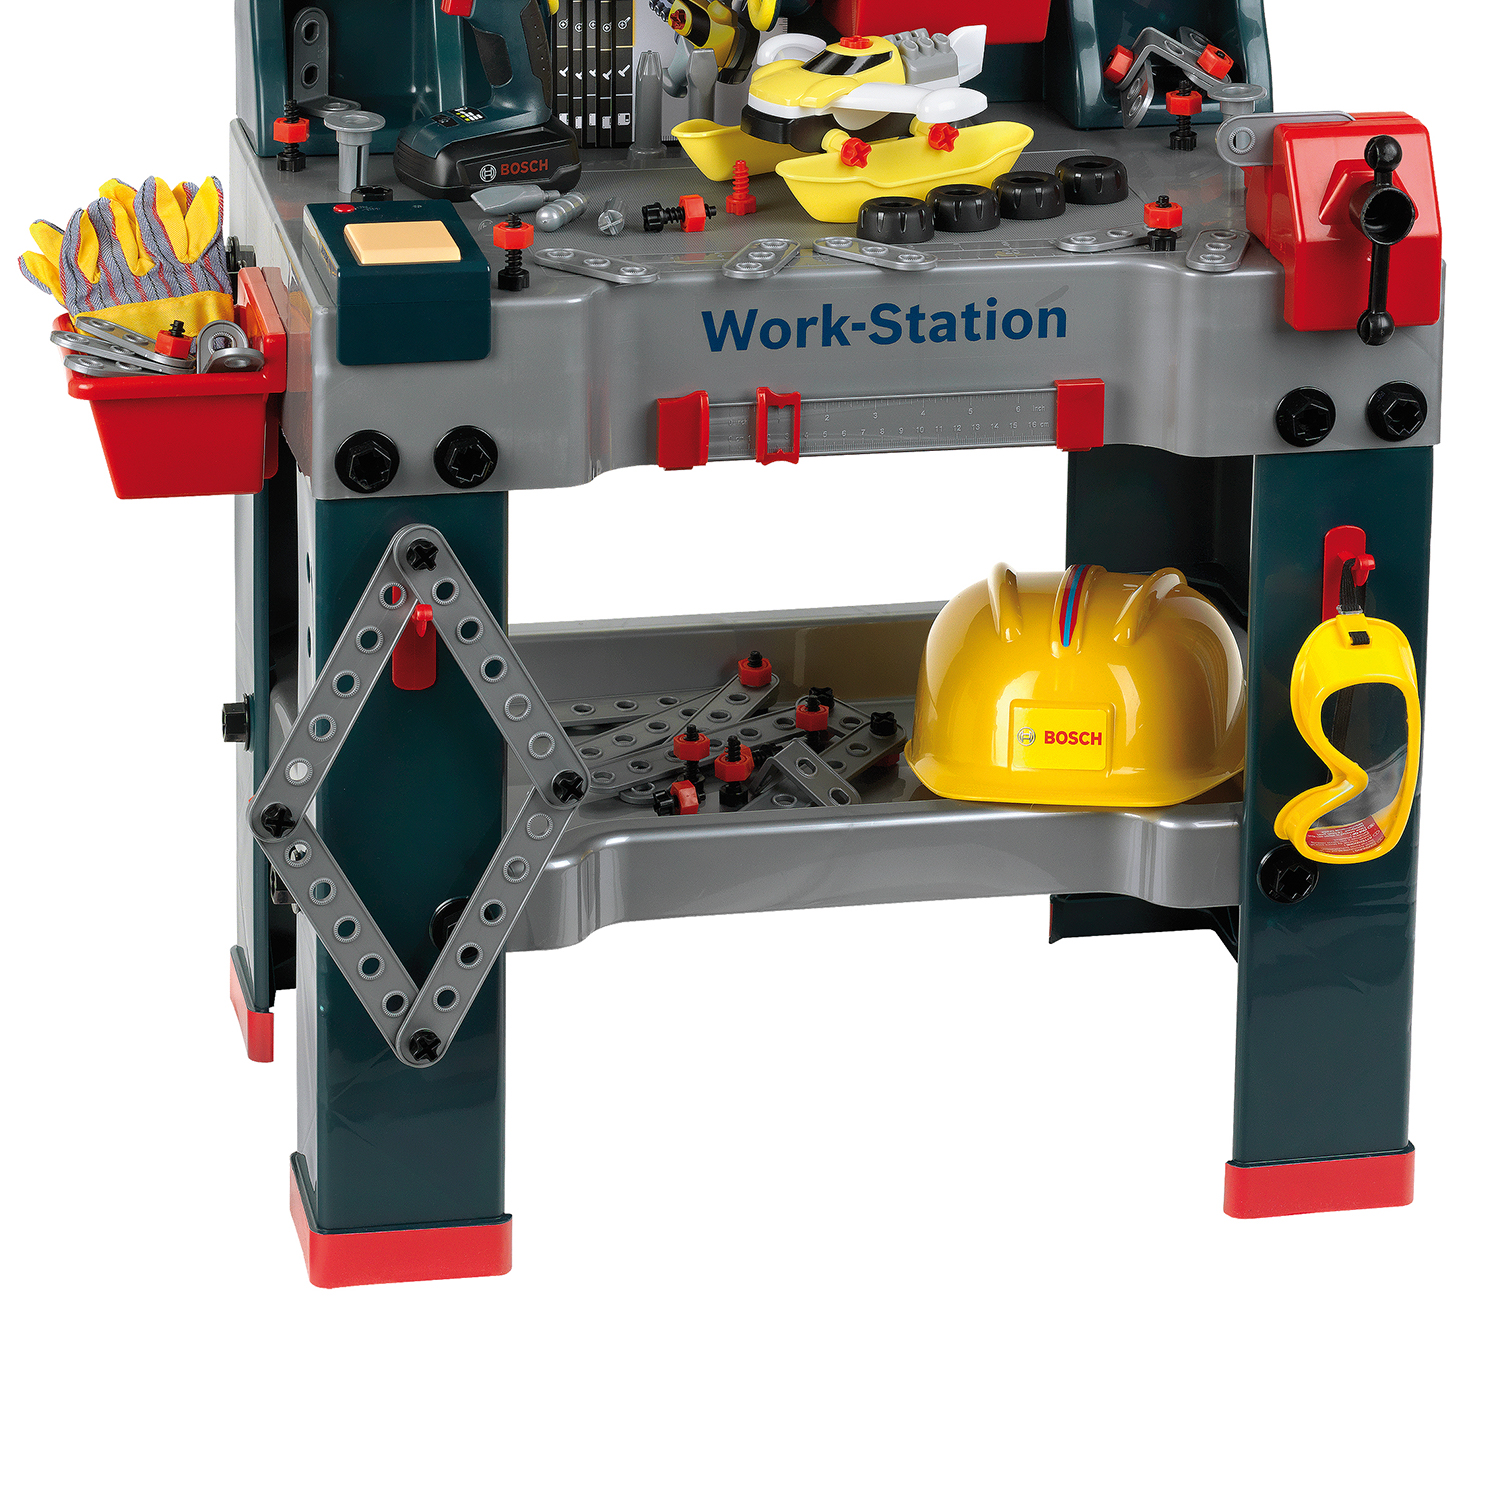 Theo Klein Bosch Jumbo Work Station Workbench DIY Children's Toy Toolset - image 3 of 6